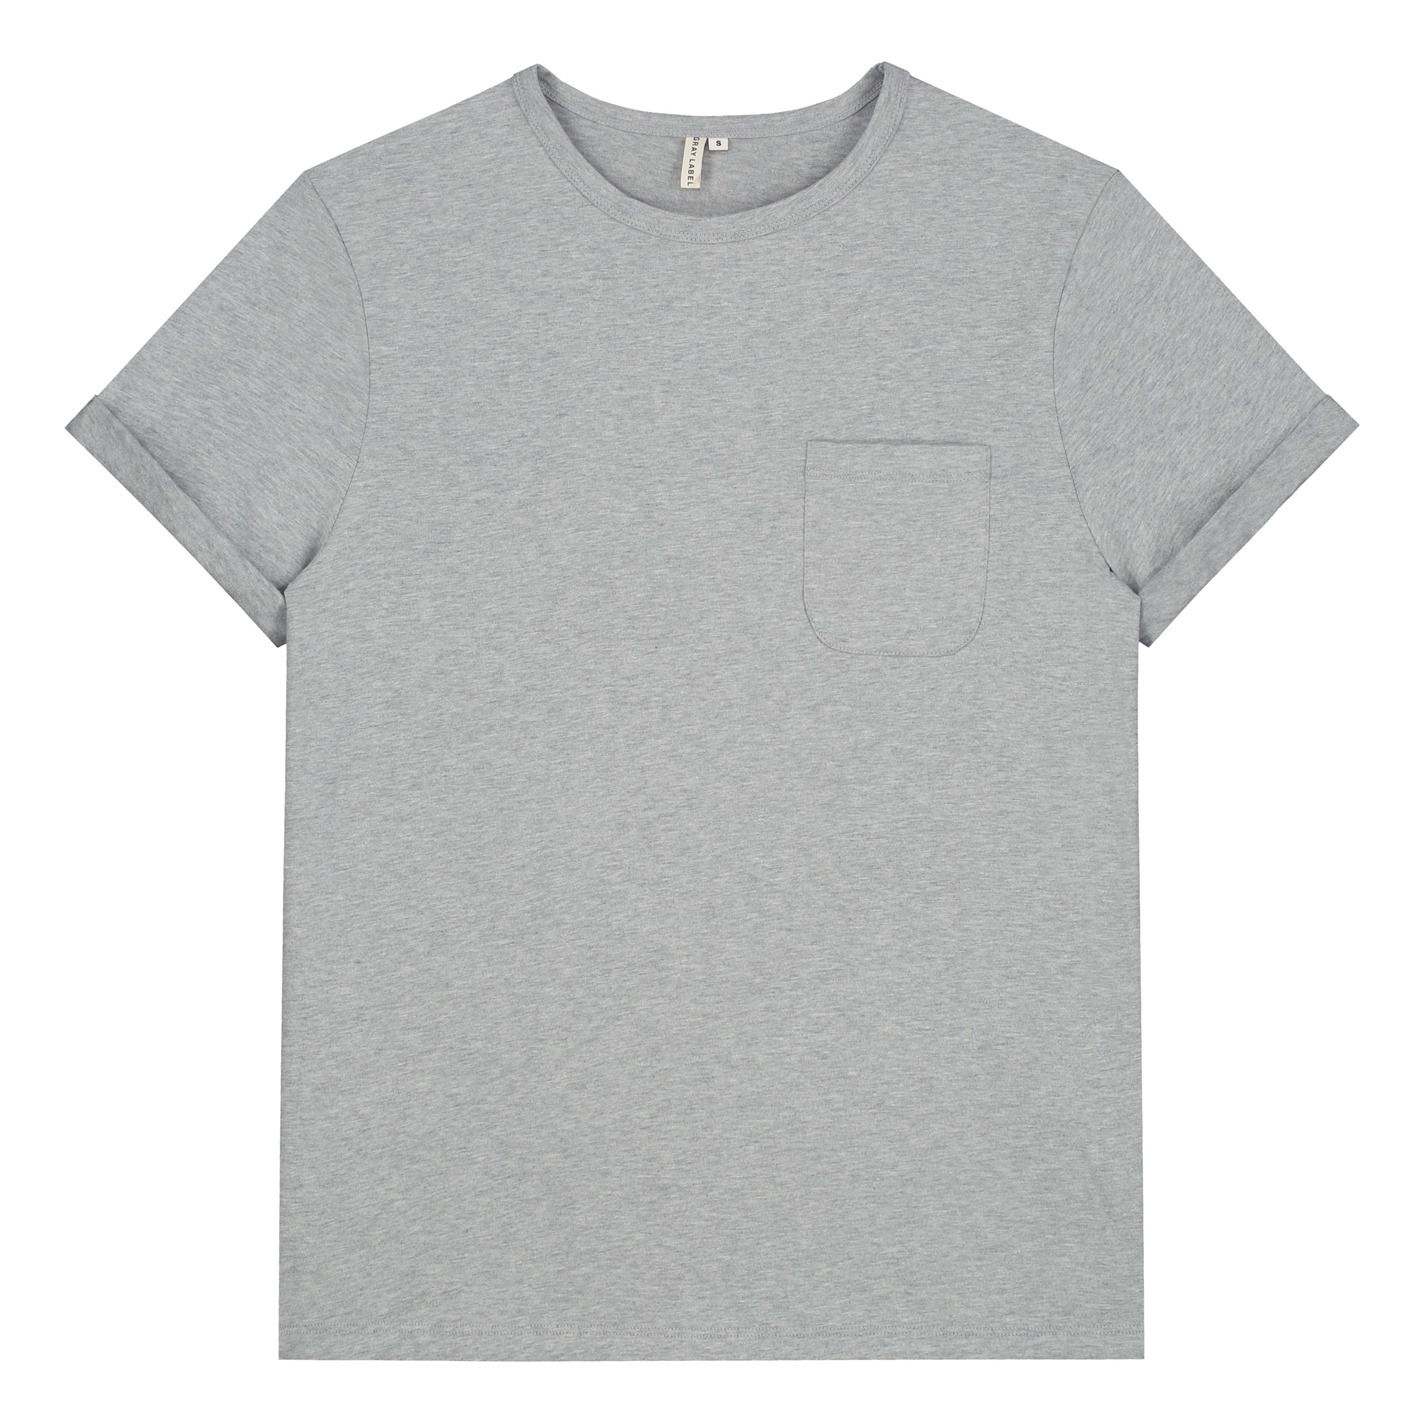 Gray Label - T-shirt Poche - Collection Femme - - Gris